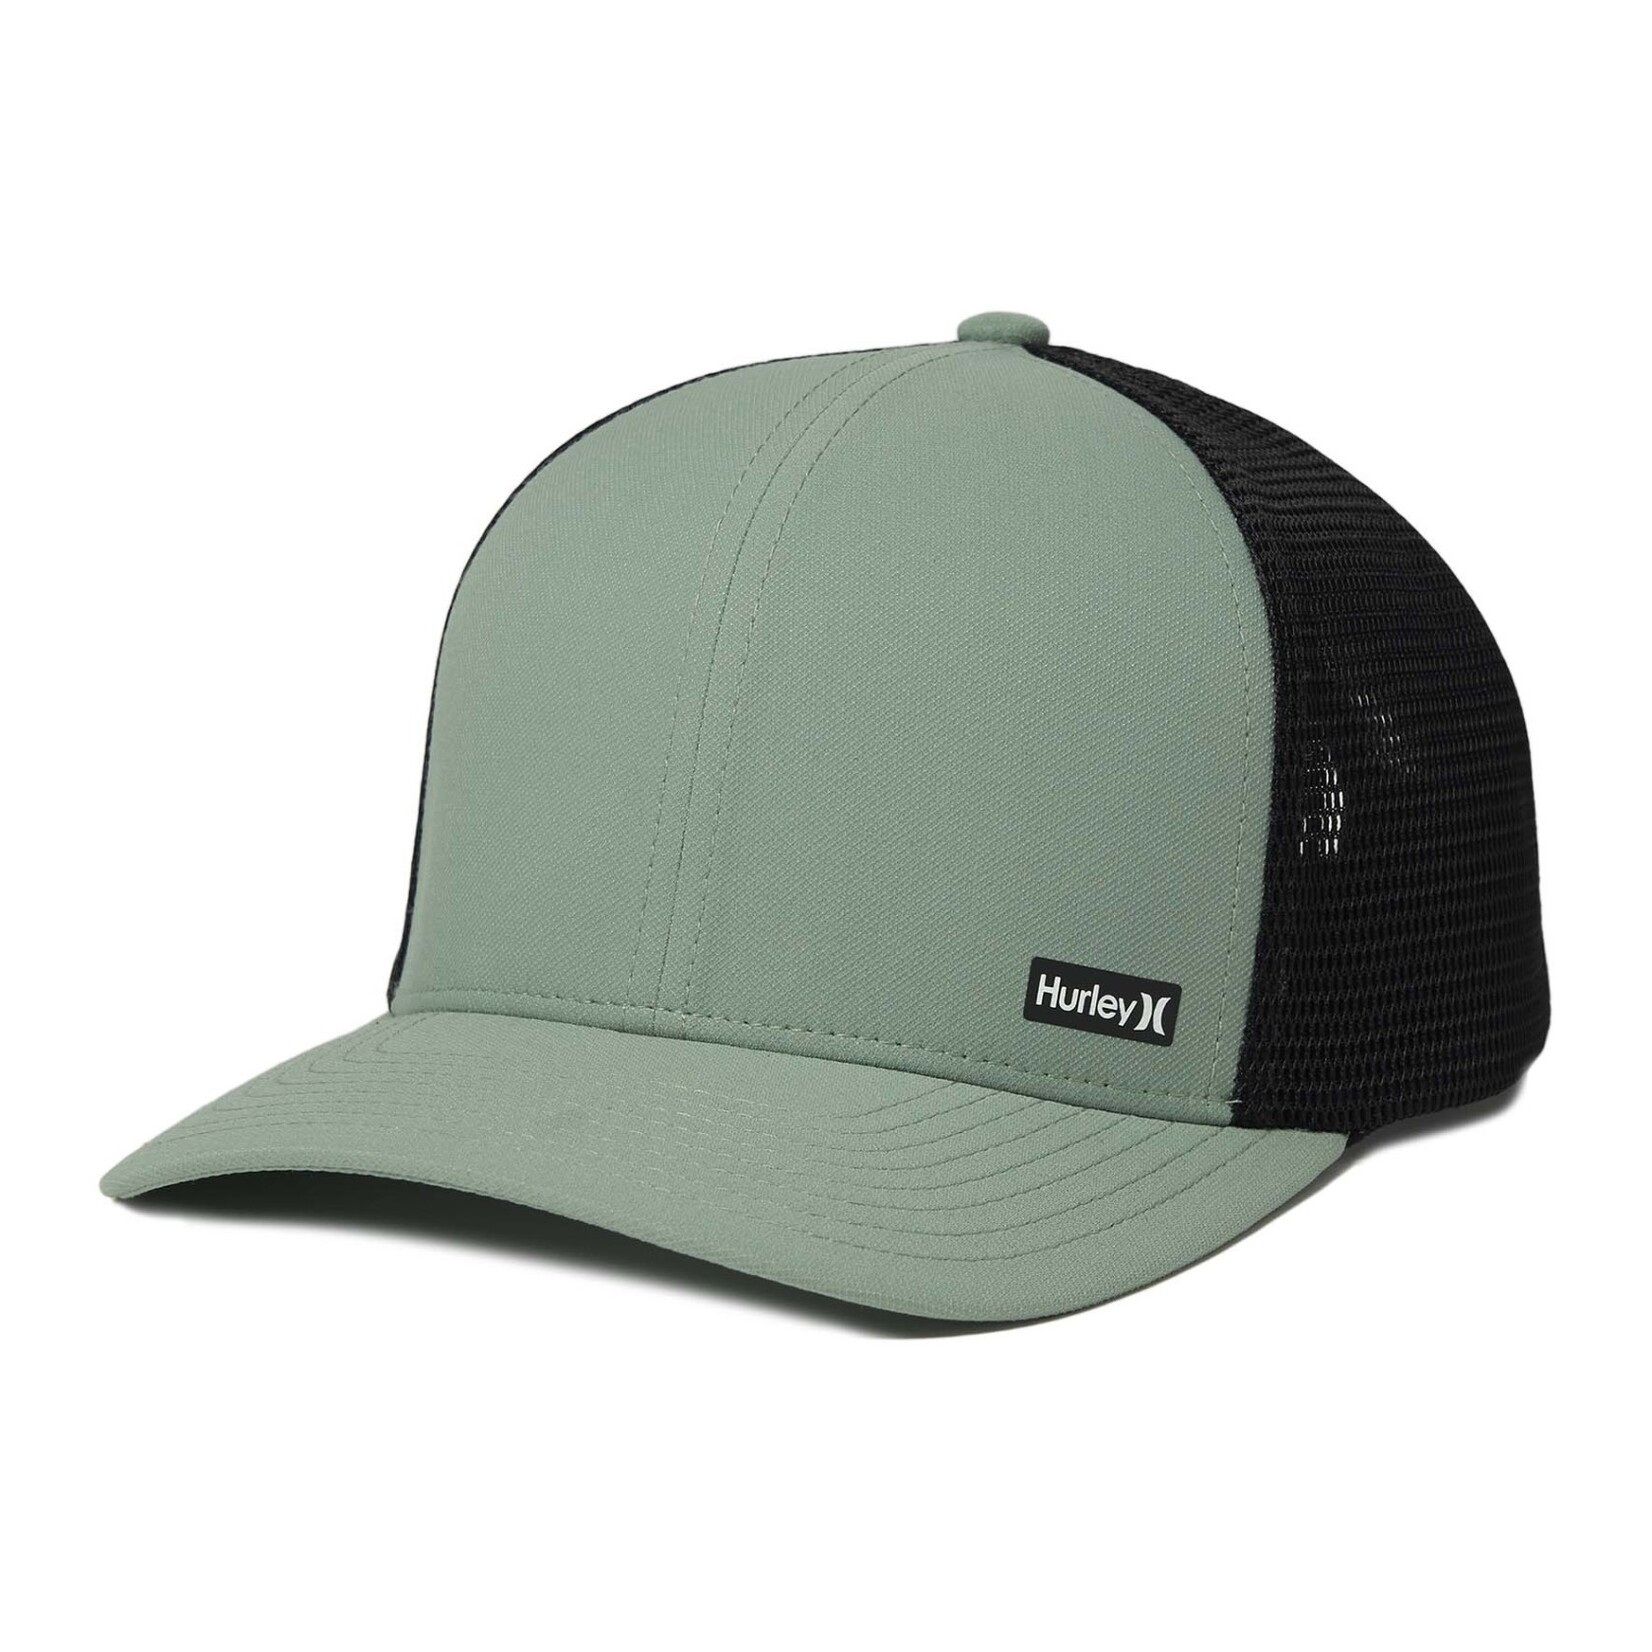 Hurley Hurley Hat, League, Mens